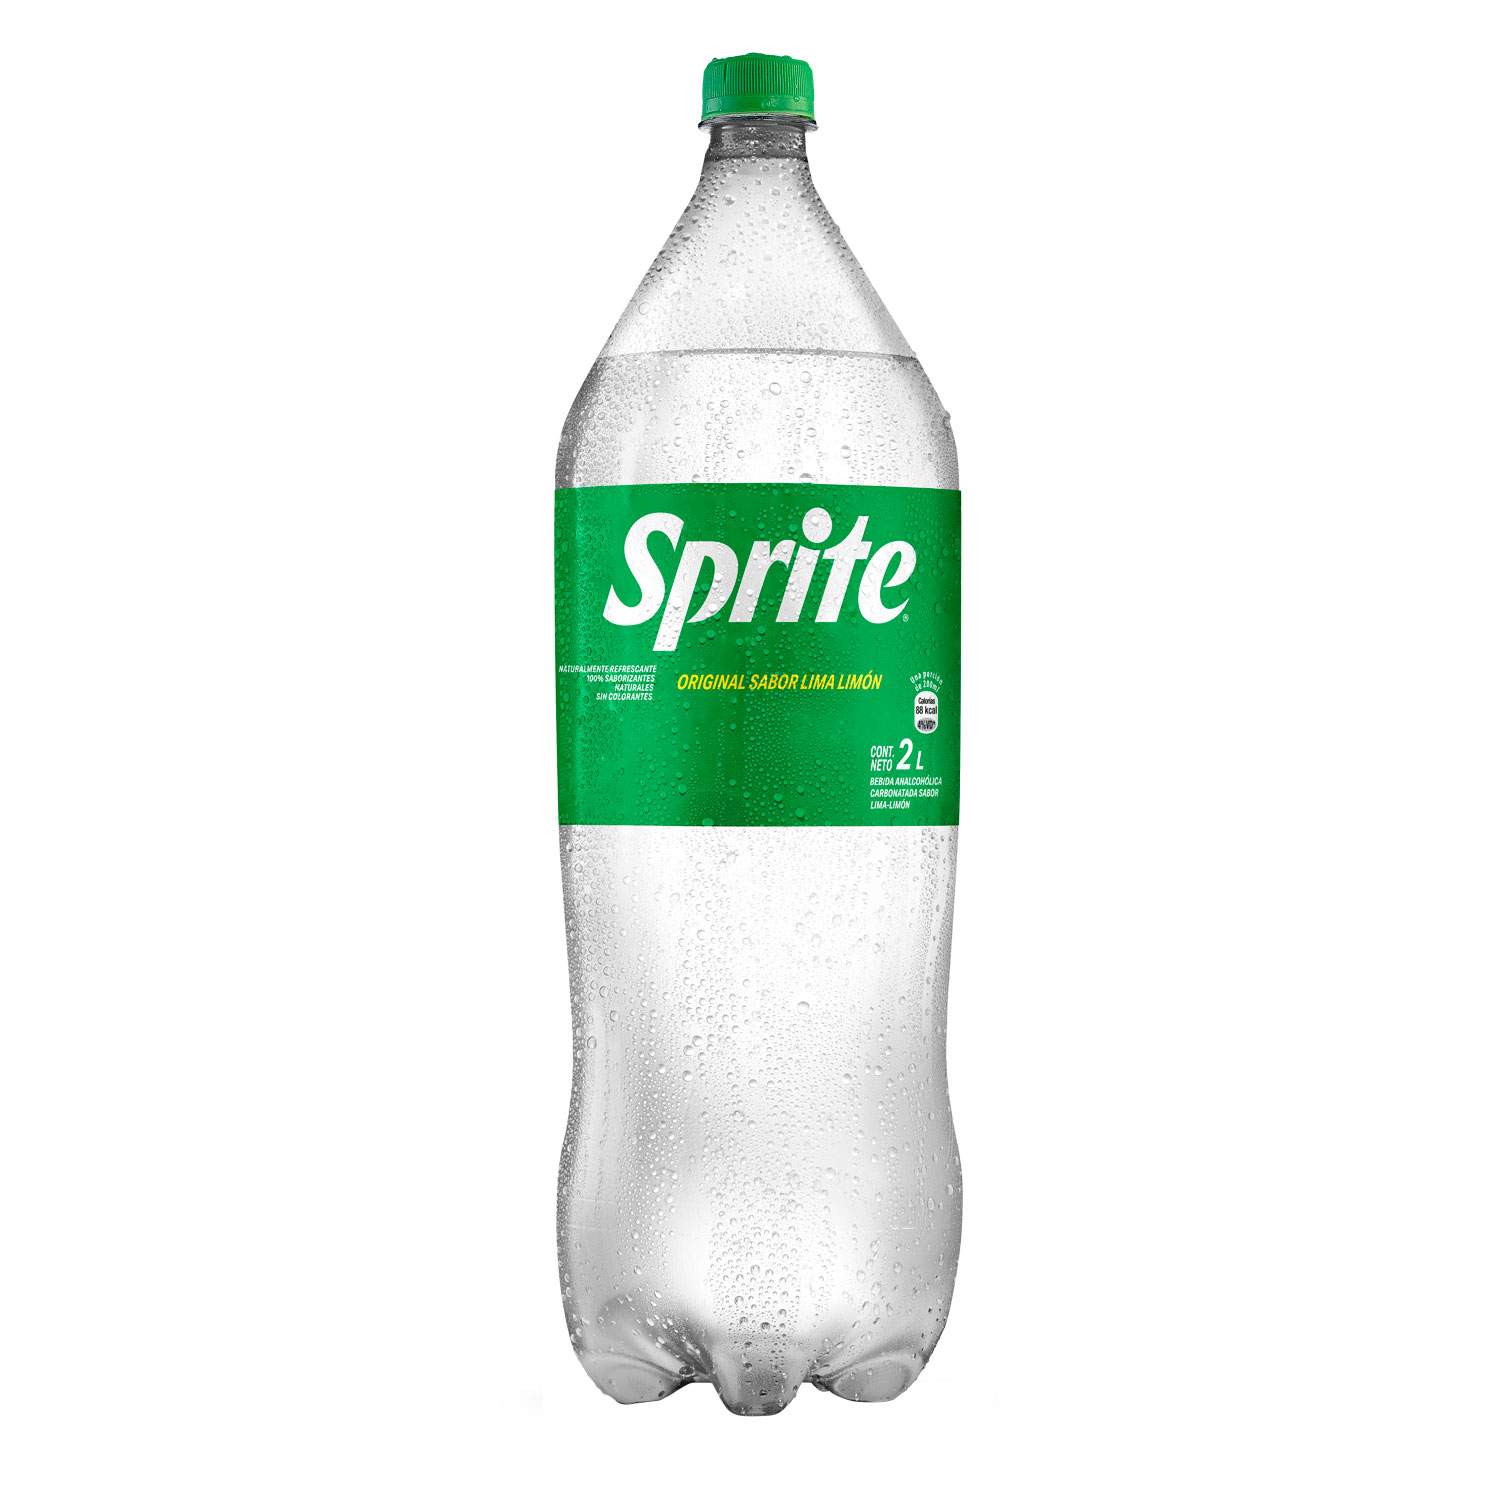 Botella de Sprite Lima Limón 2L